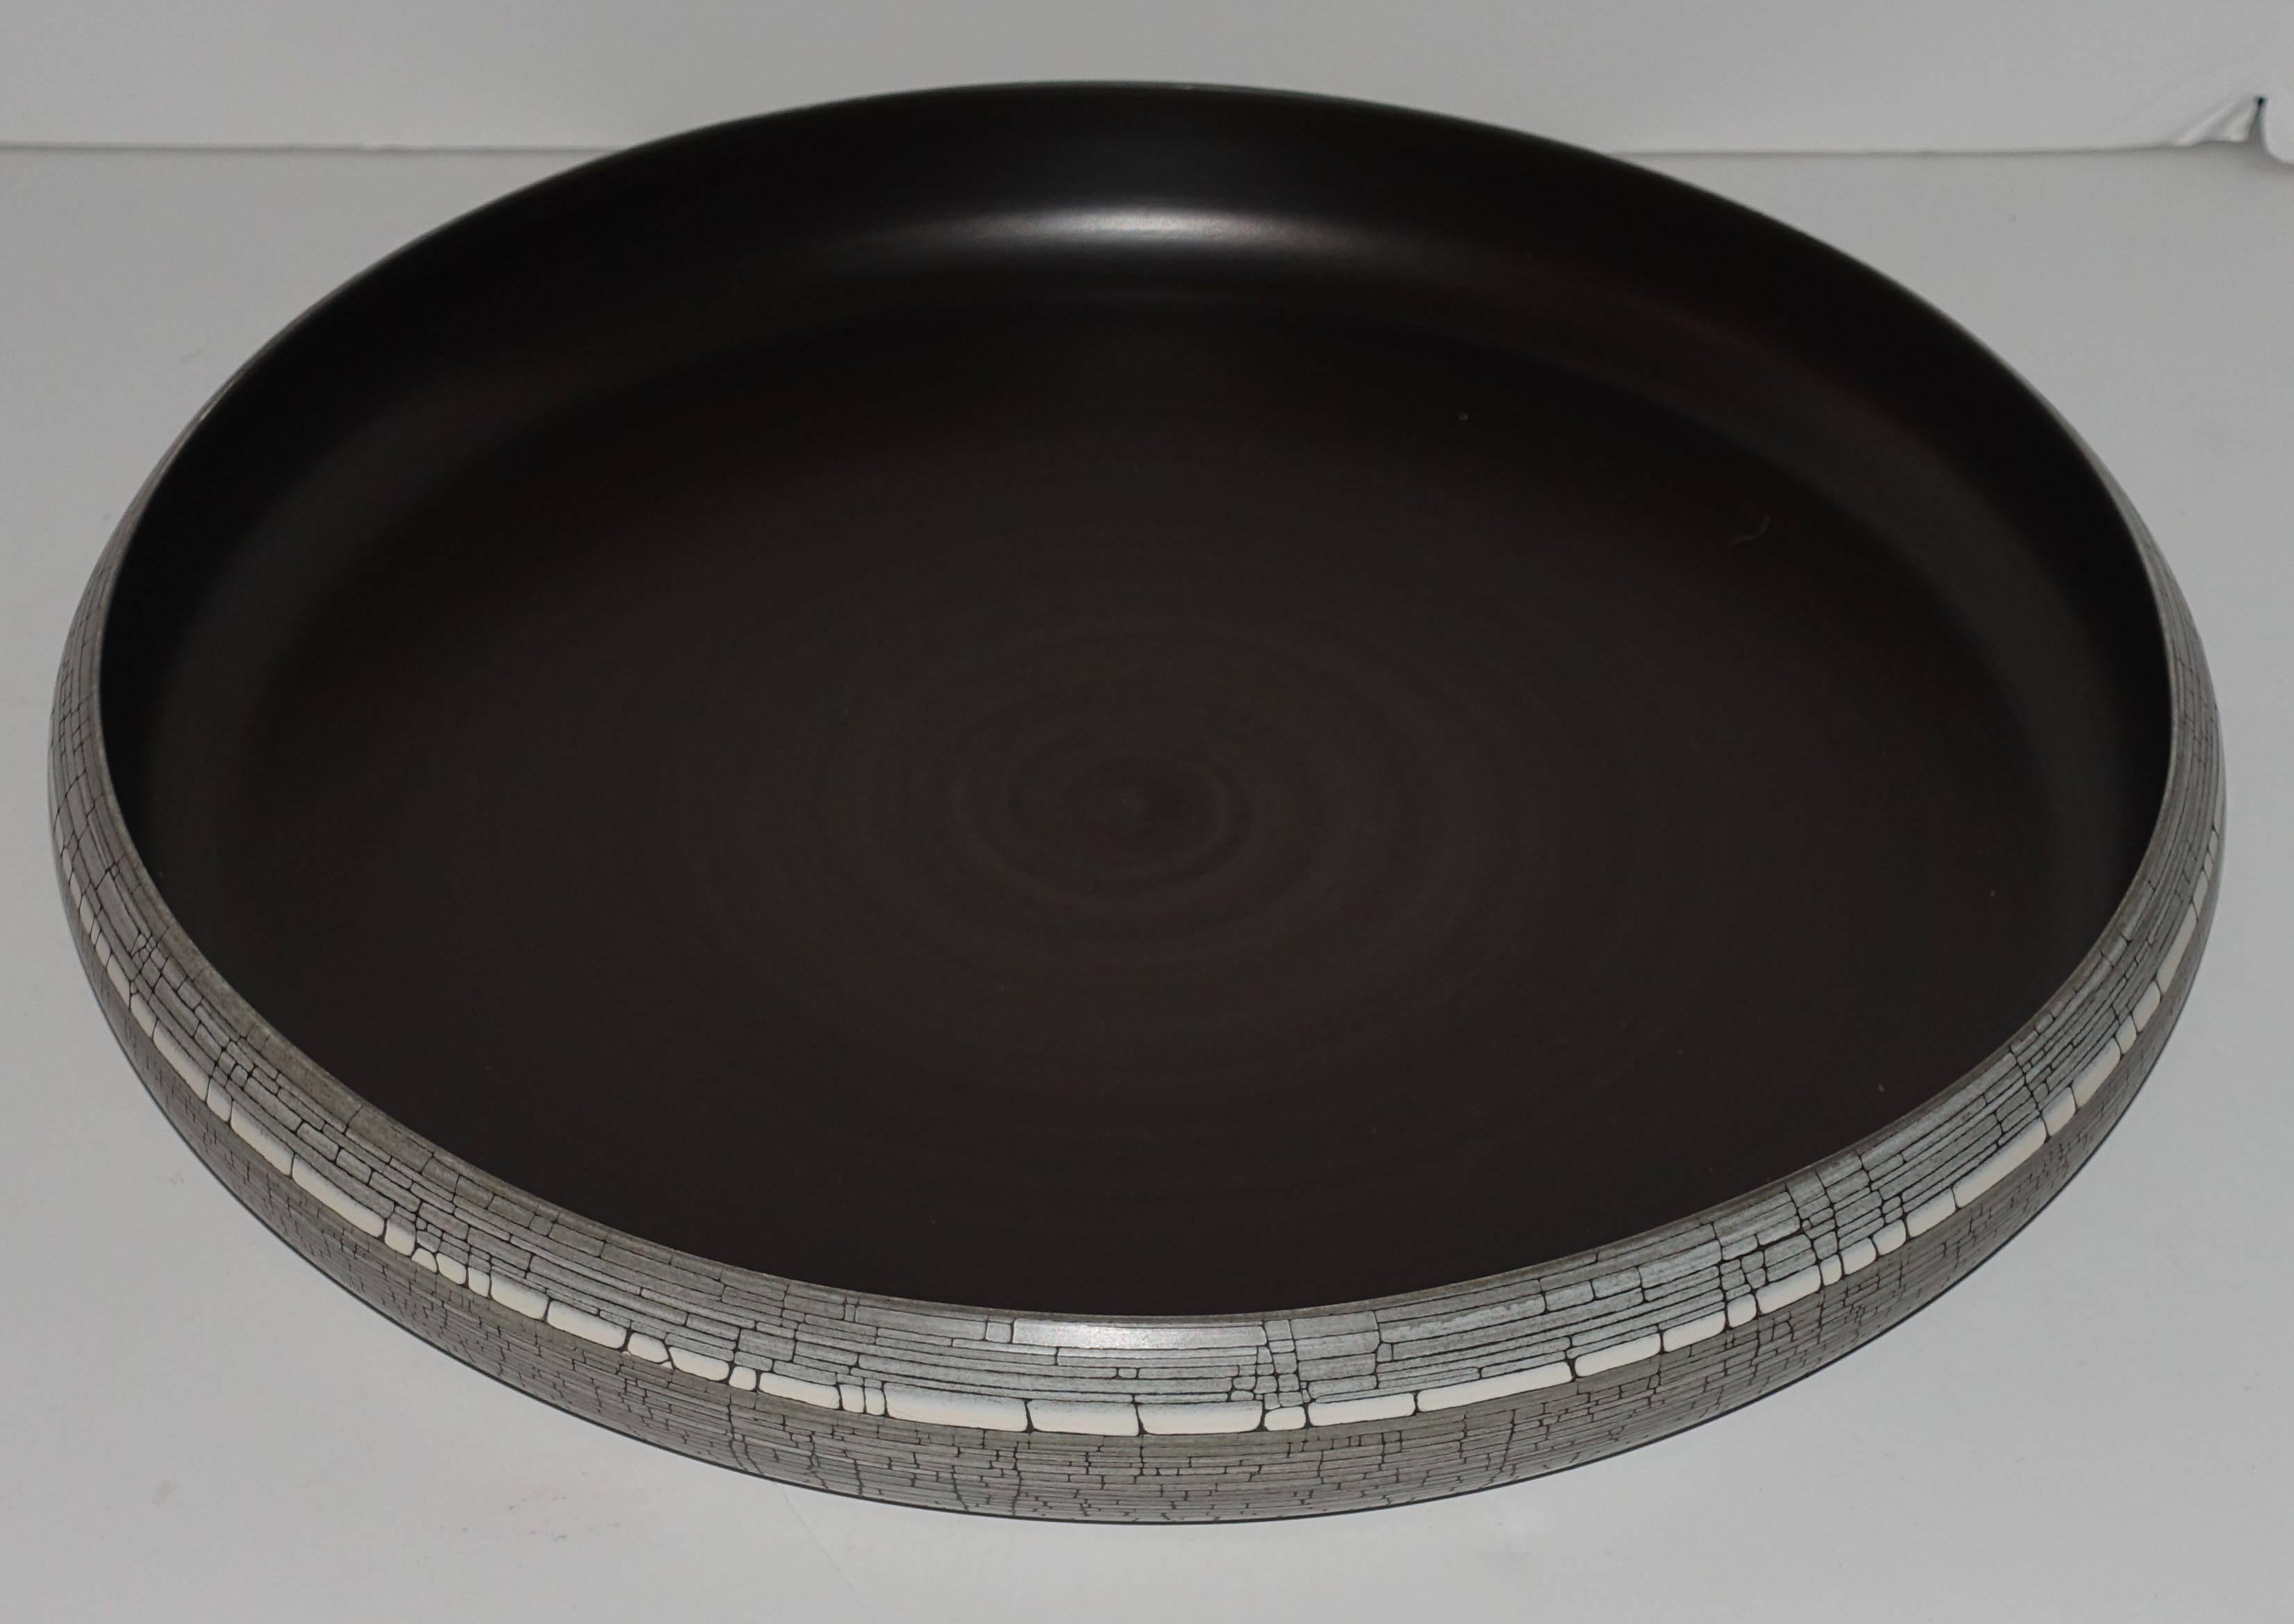 Contemporary Italian handcrafted fine ceramic bowl.
Exterior has a birch motif, interior is dark bronze.
Food safe.

